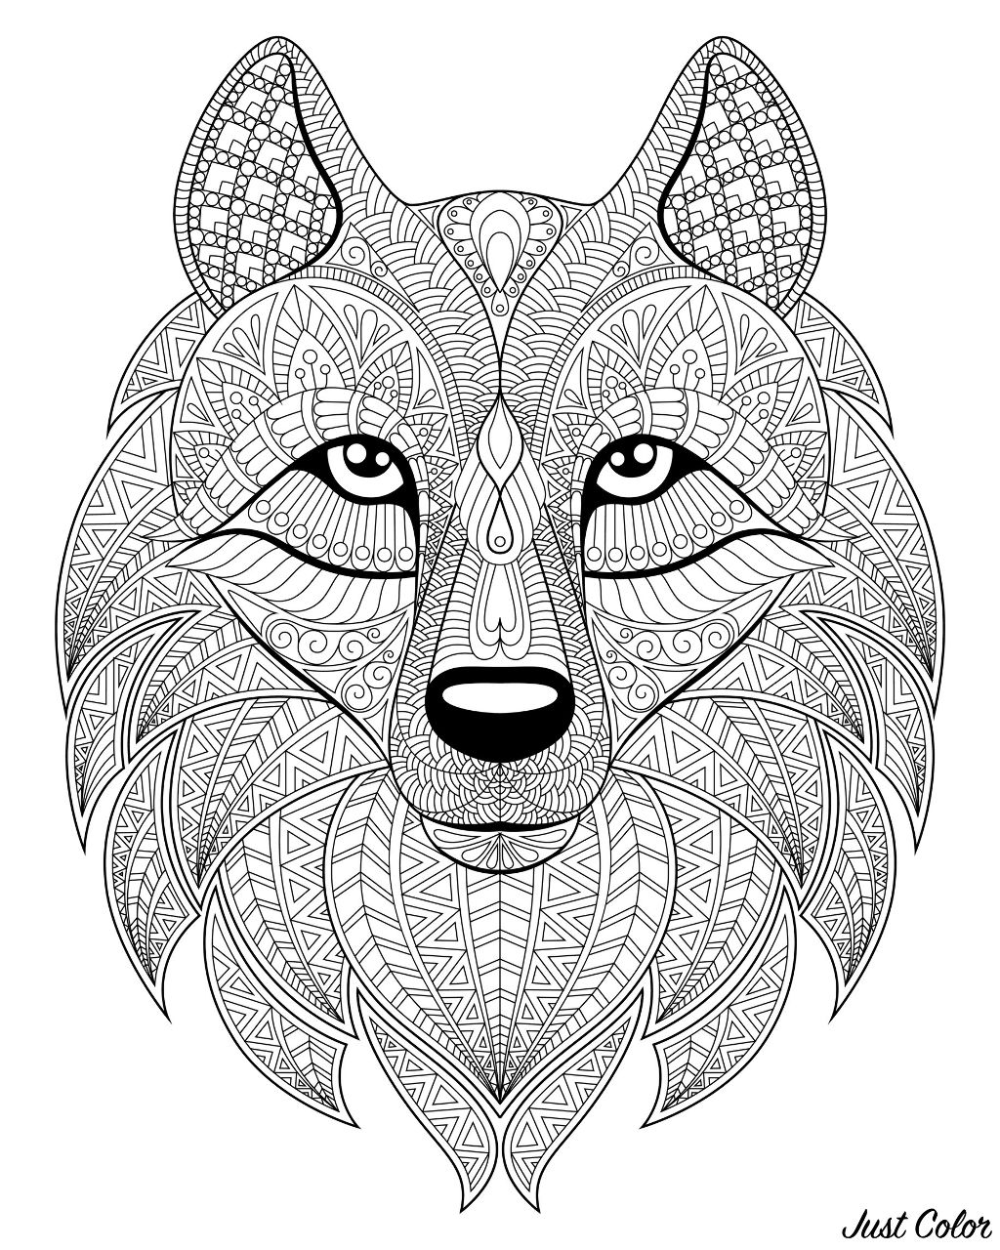 Ideas de dibujos de lobo para Dibujar. Ideas de Cabeza de Lobos para tatto.  Ideas de Tatto dibujos de lobos.  dibujos de un lobo dibujo de lobos imagenes de lobos para dibujar un lobo para dibujar imágenes de lobos para dibujar lobo dibujo lobos para dibujar dibujos de lobos para dibujar